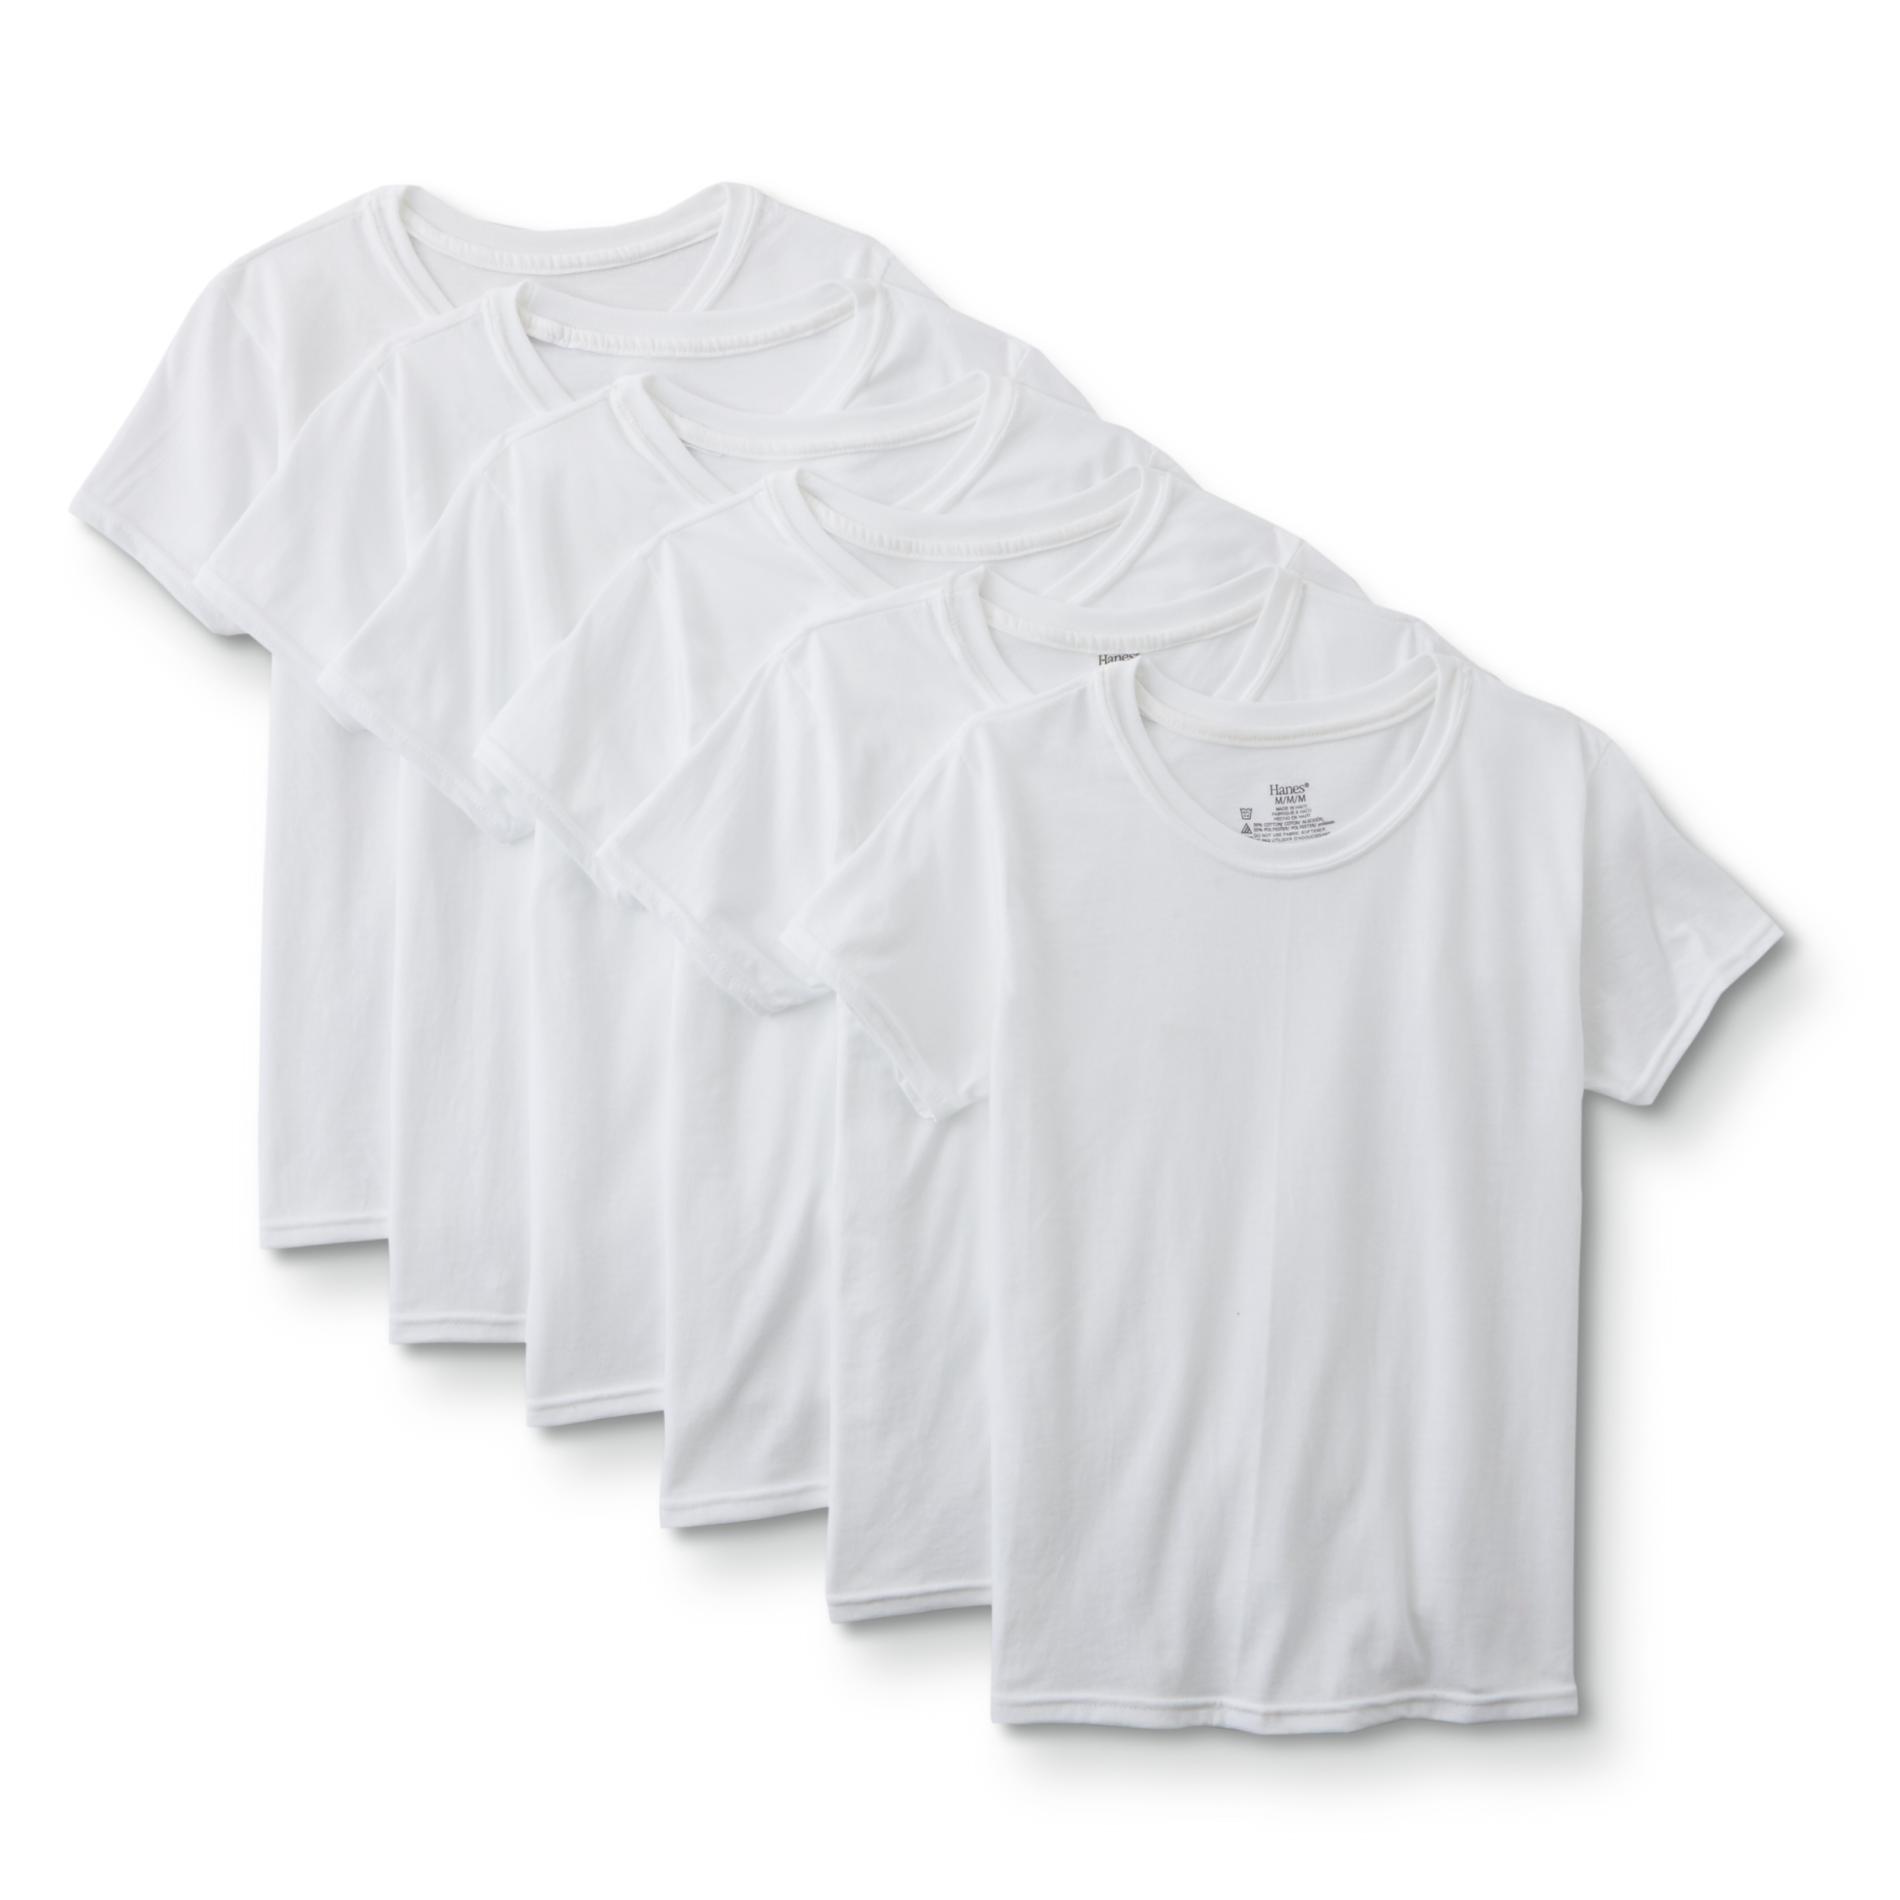 Hanes Authentic Tagless Boys Cotton T-Shirt 